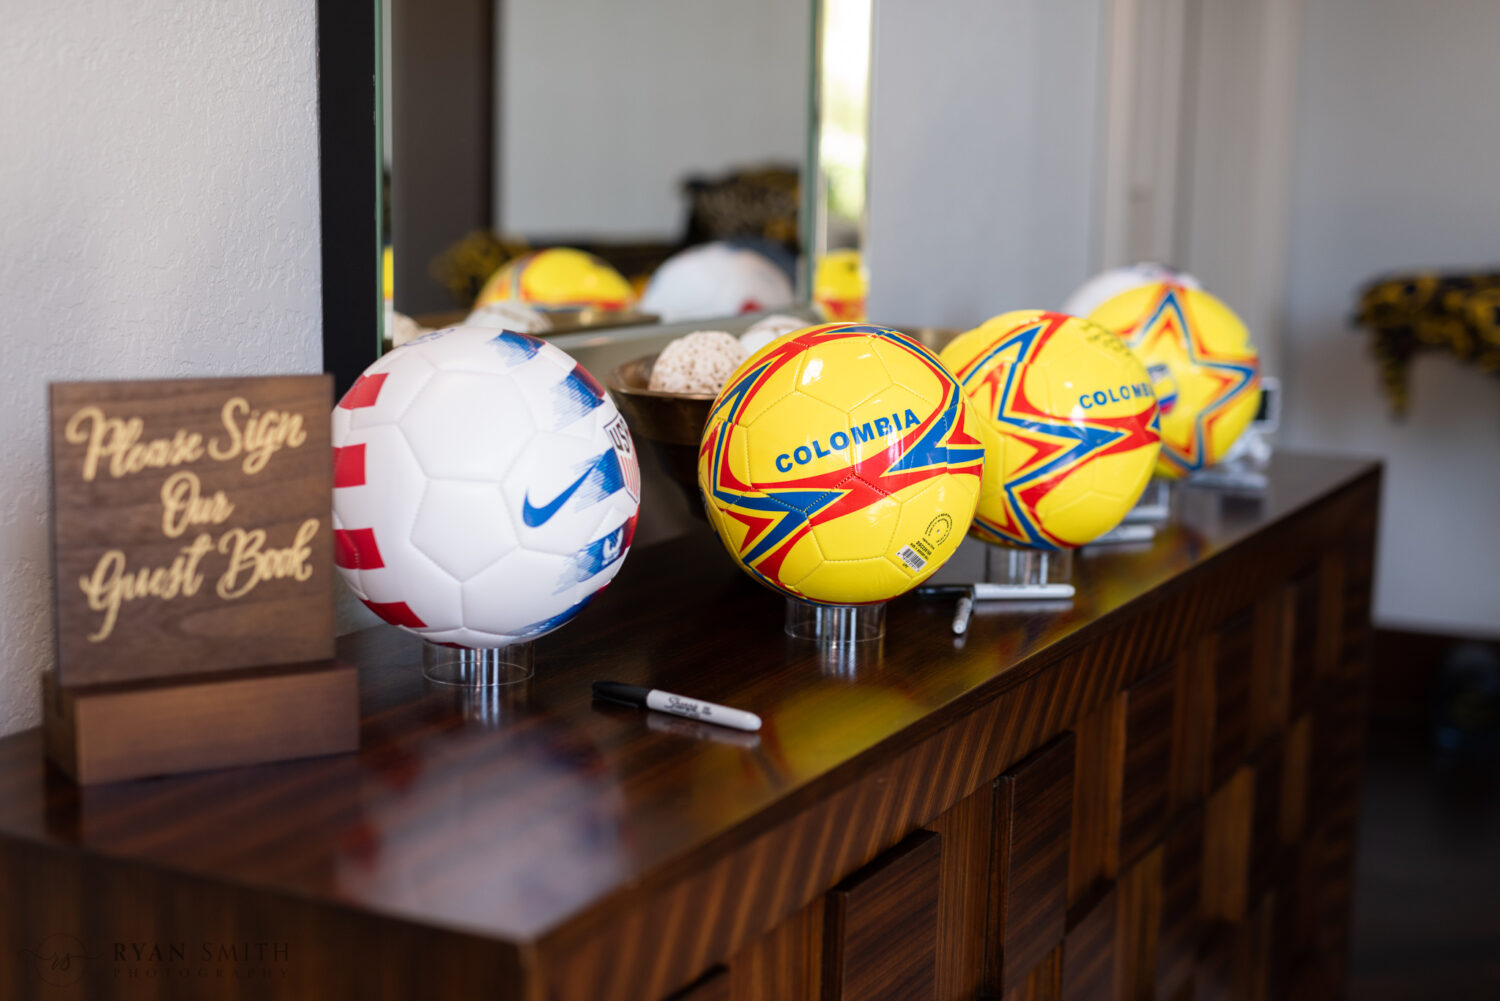 Colombia soccer balls used as wedding guestbook - Grande Dunes Ocean Club